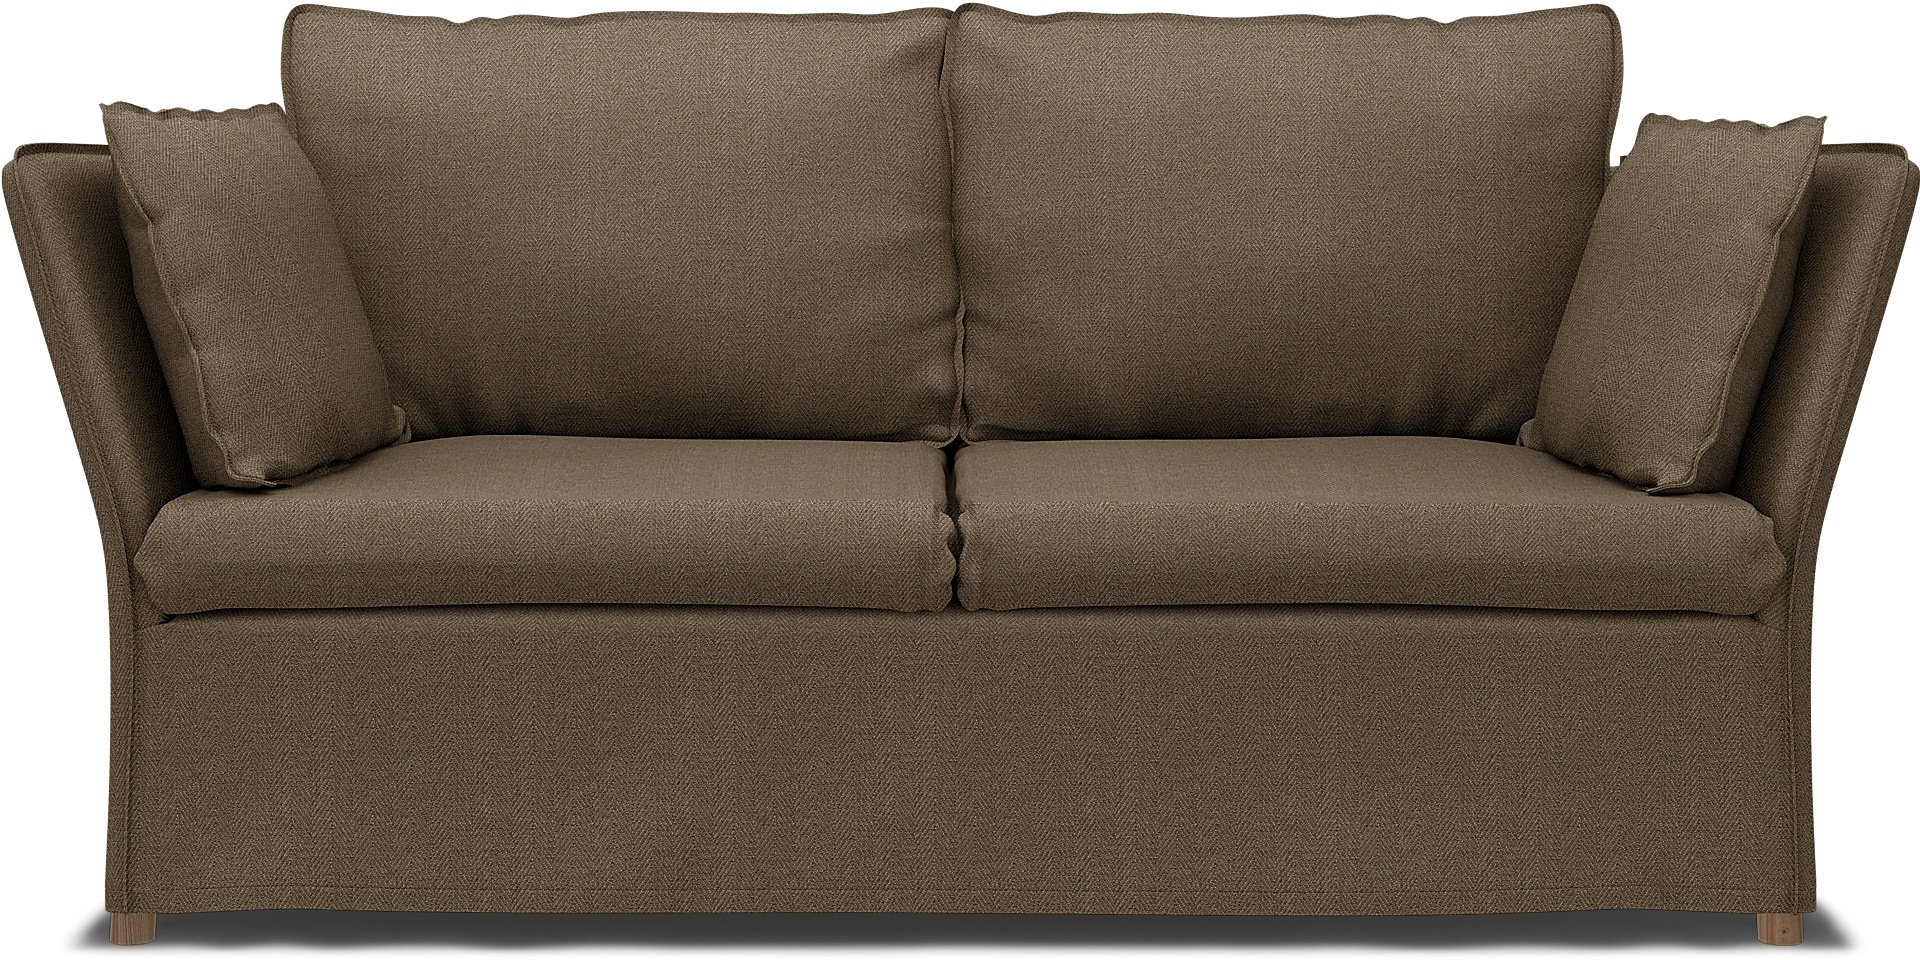 IKEA - Backsalen 2 seater sofa, Dark Taupe, Boucle & Texture - Bemz